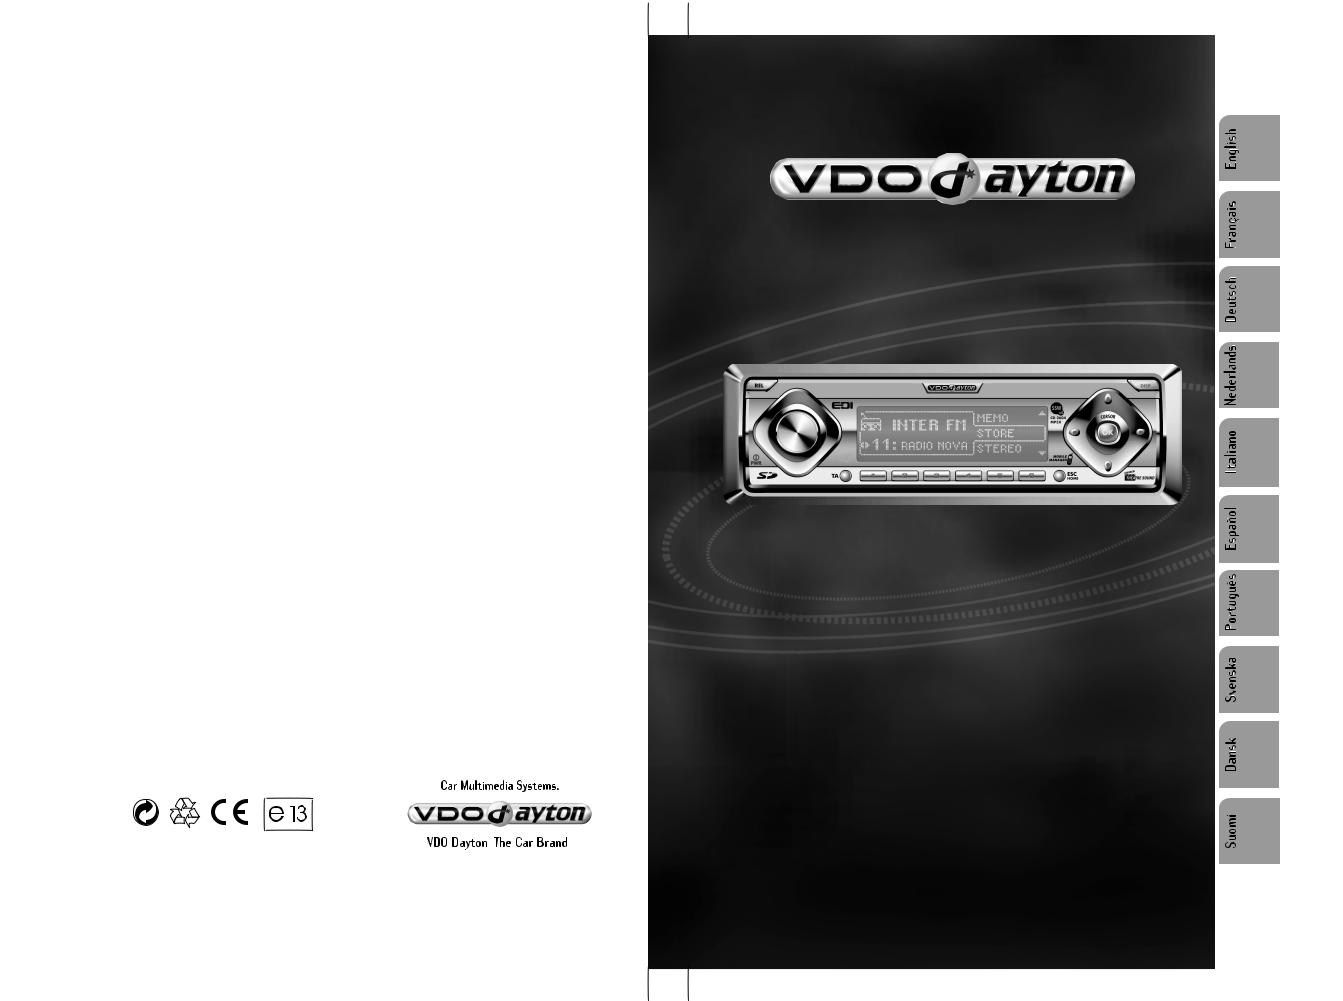 Vdo dayton CD 2604 MP3 Manual